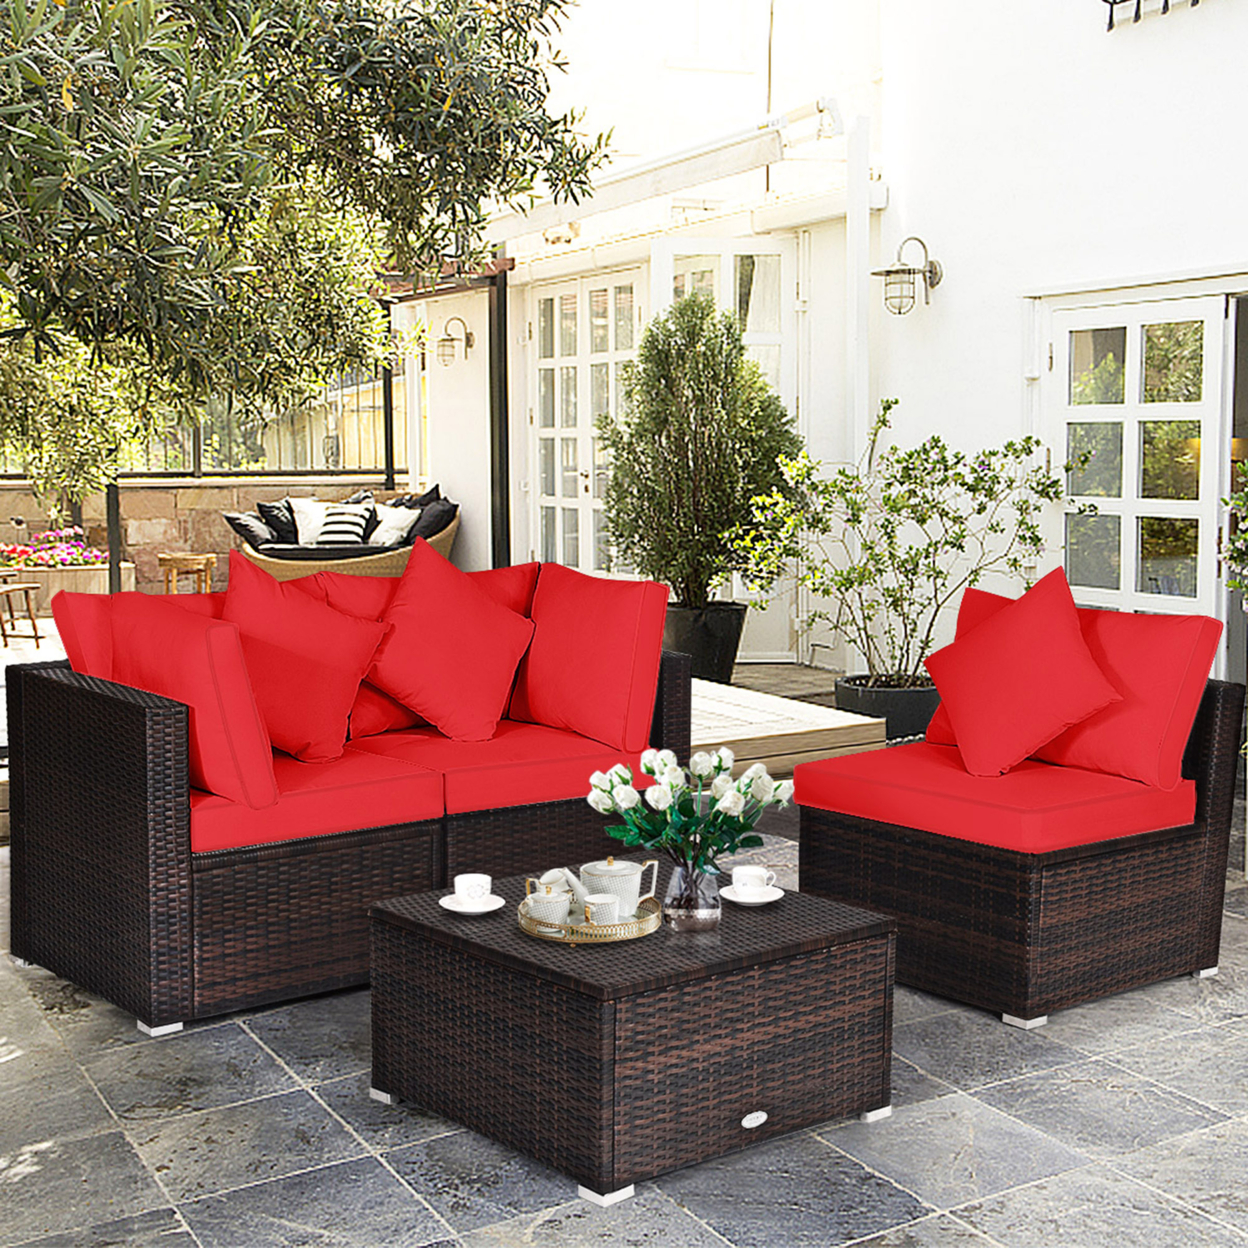 4PCS Rattan Patio Conversation Furniture Set Yard Outdoor W/ Red Cushion